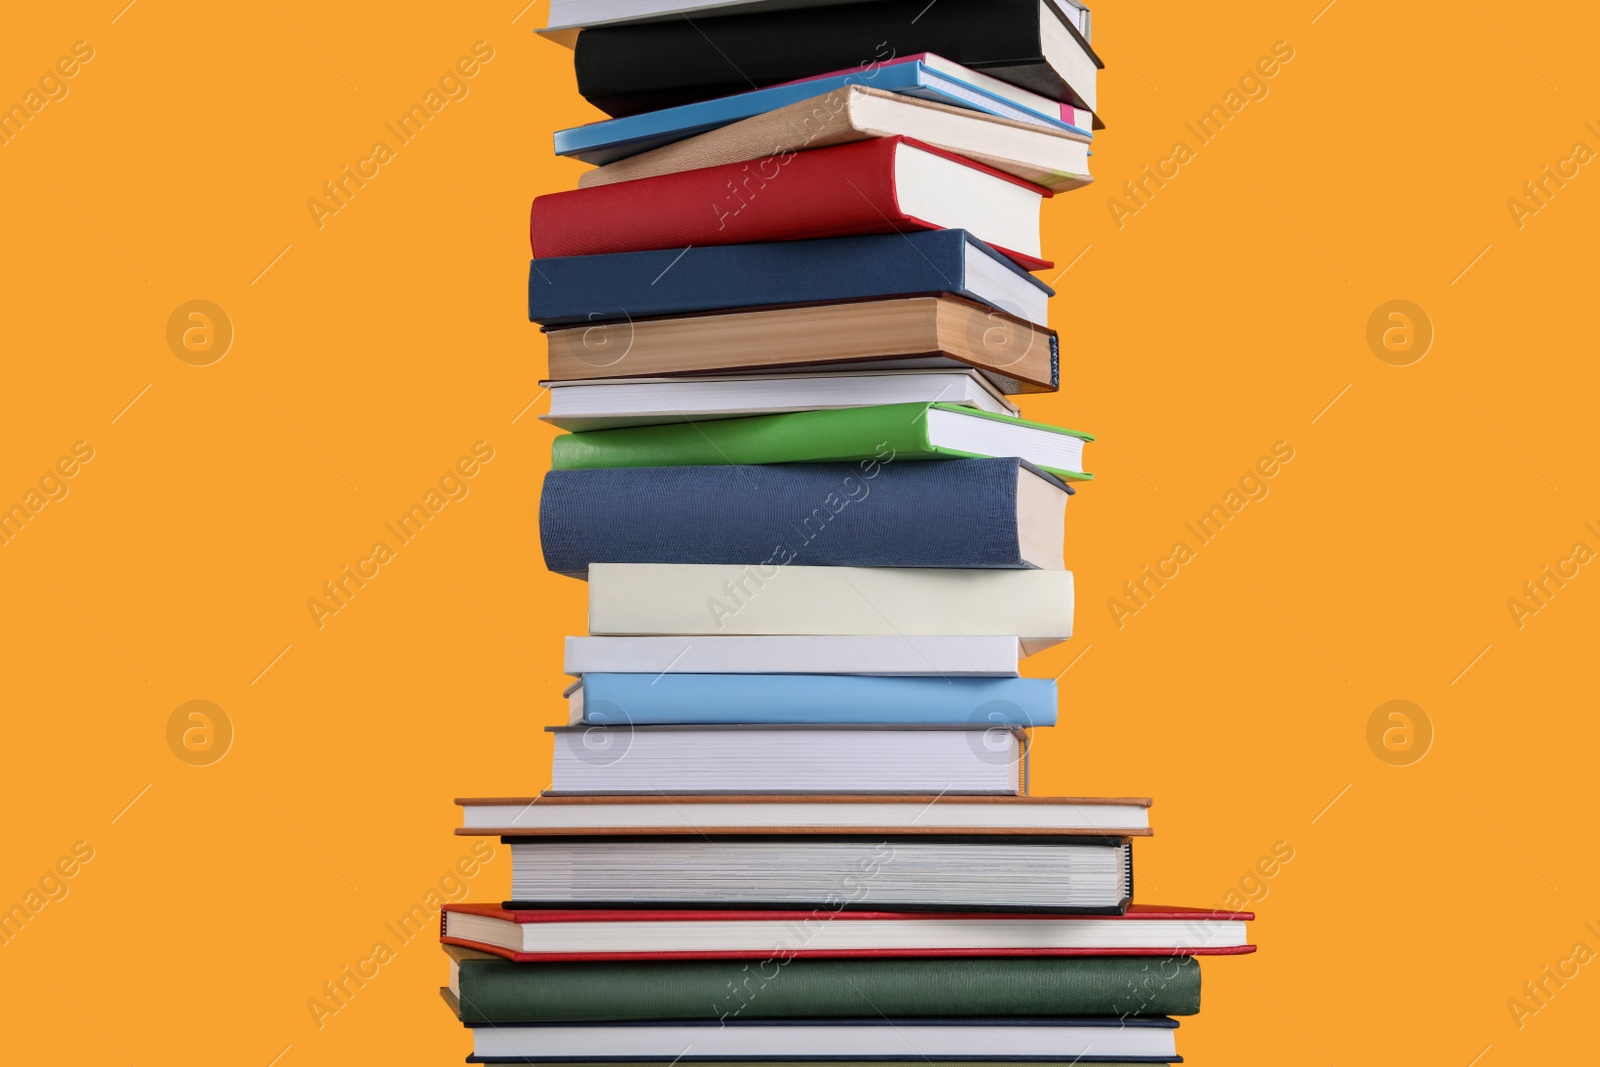 Photo of Stack of hardcover books on orange background